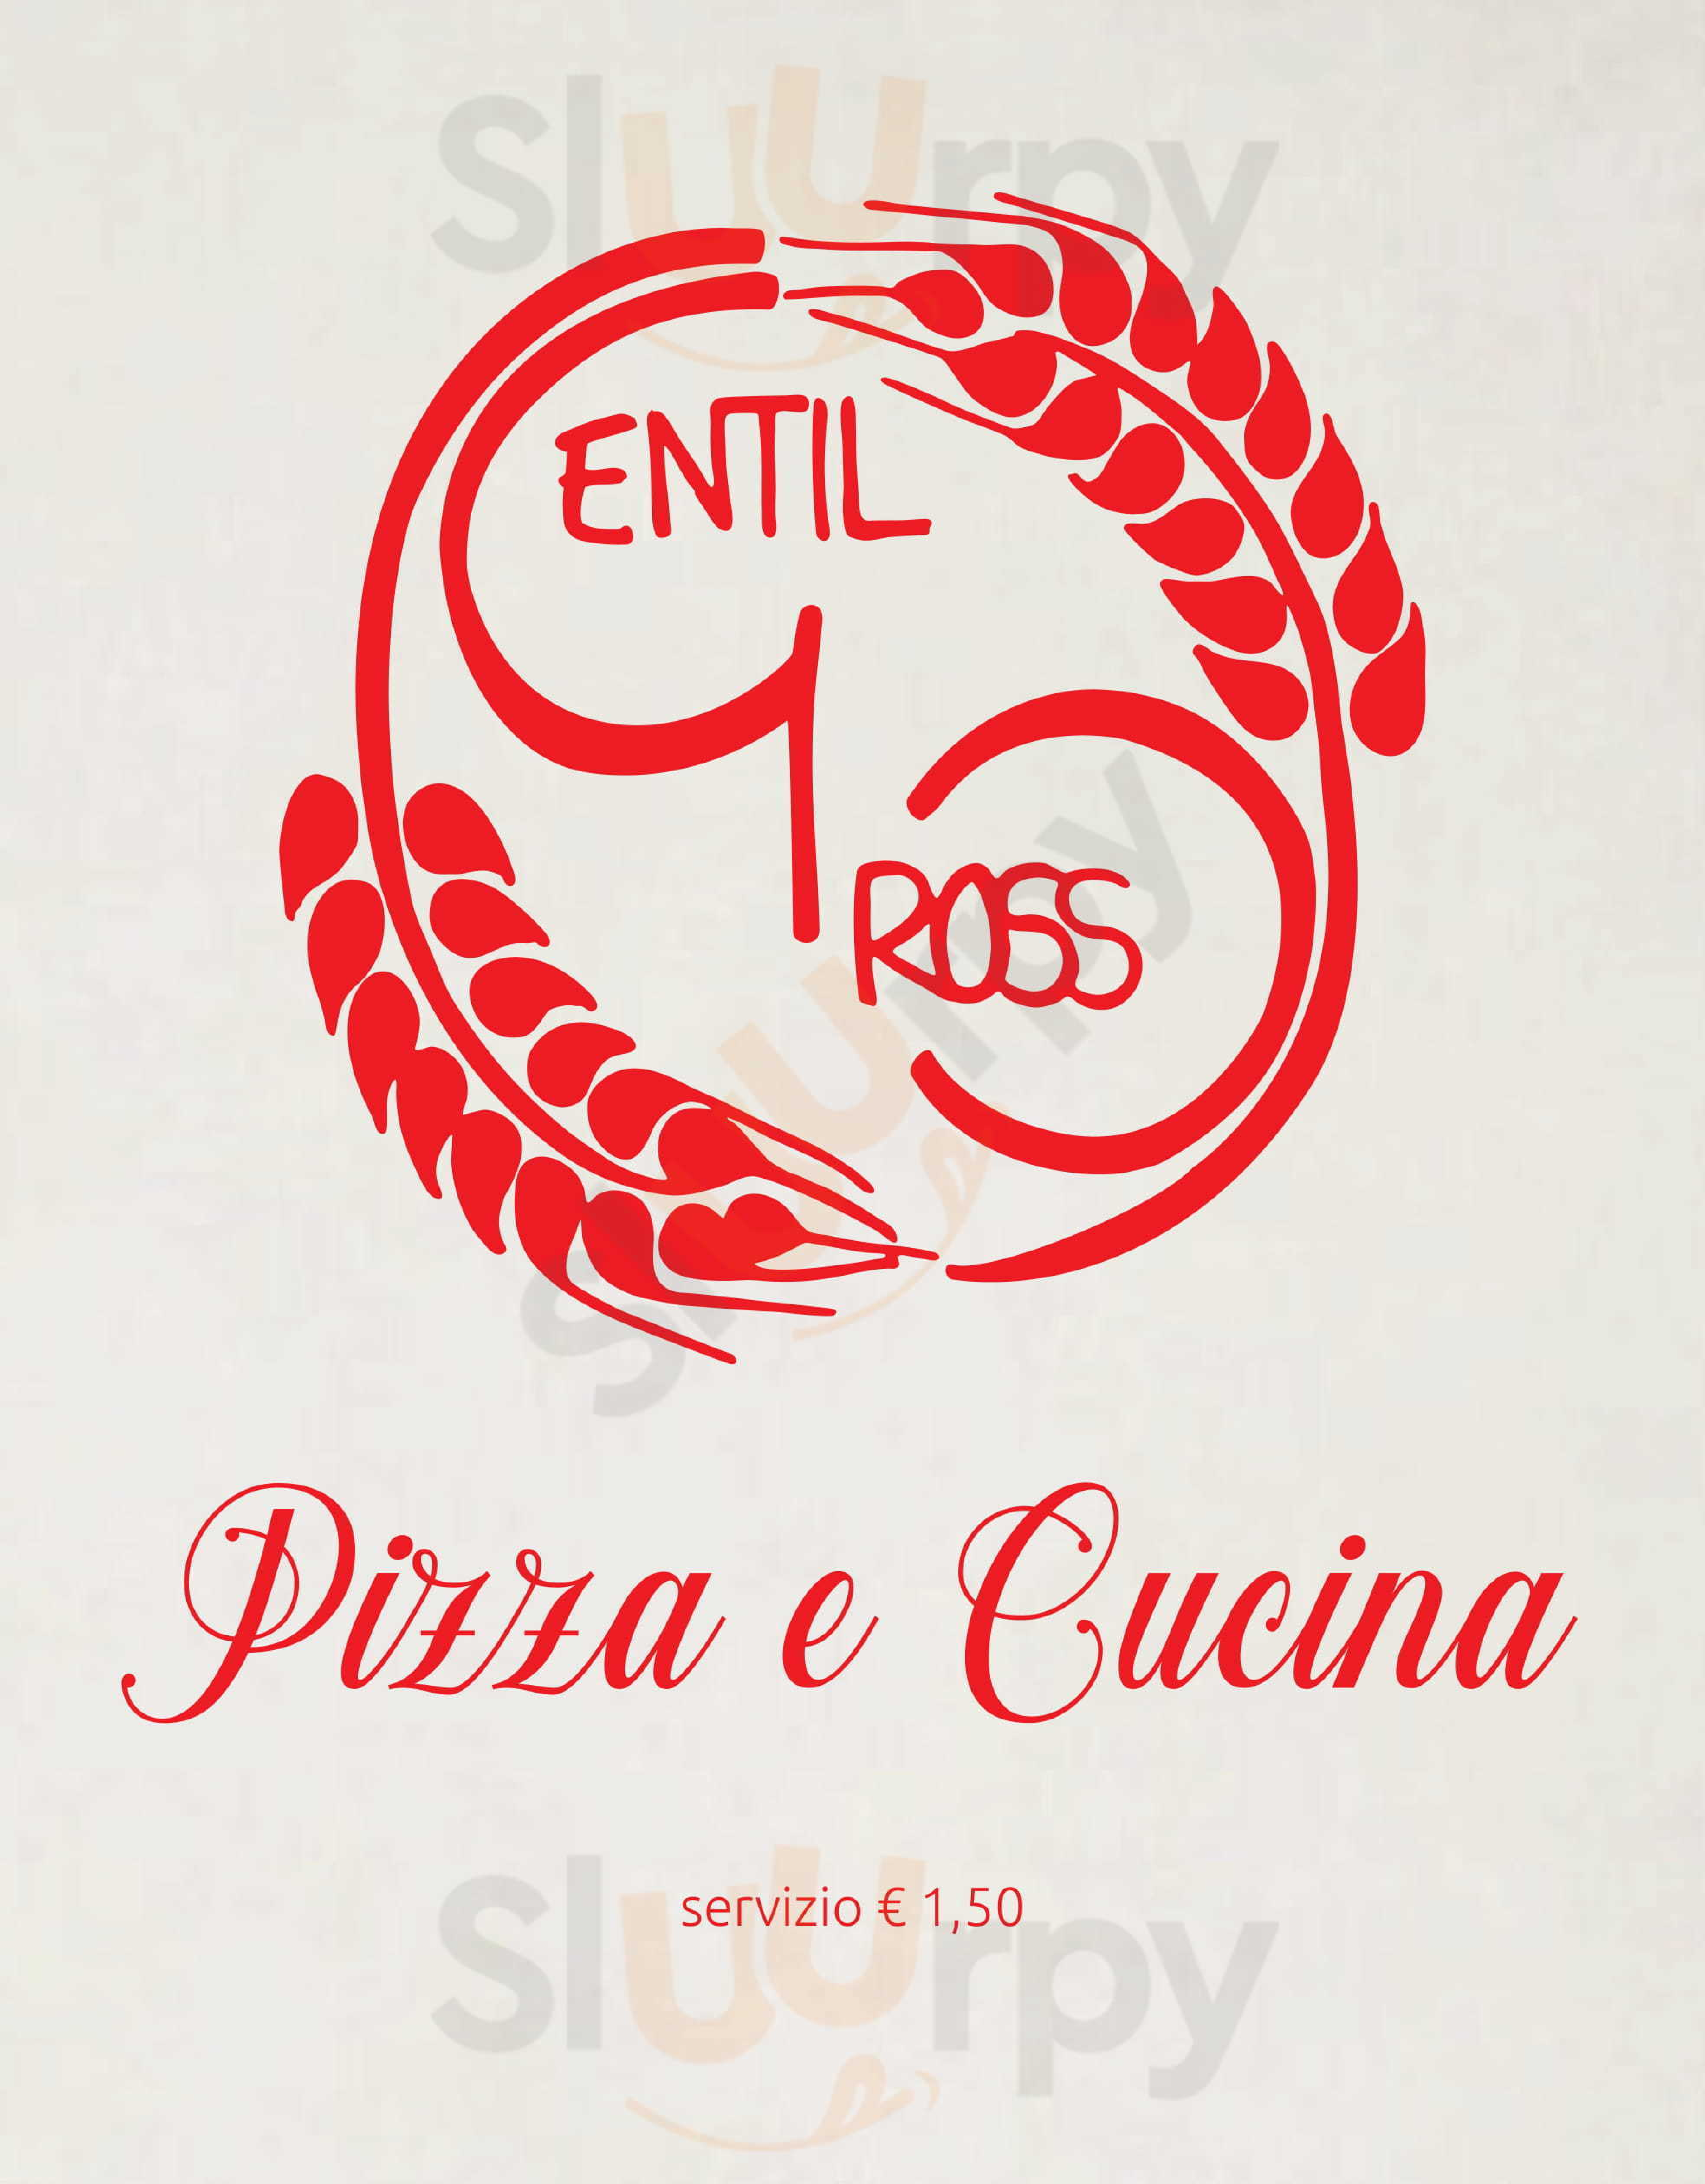 Gentil Rosso pizza e cucina Villafranca di Verona menù 1 pagina